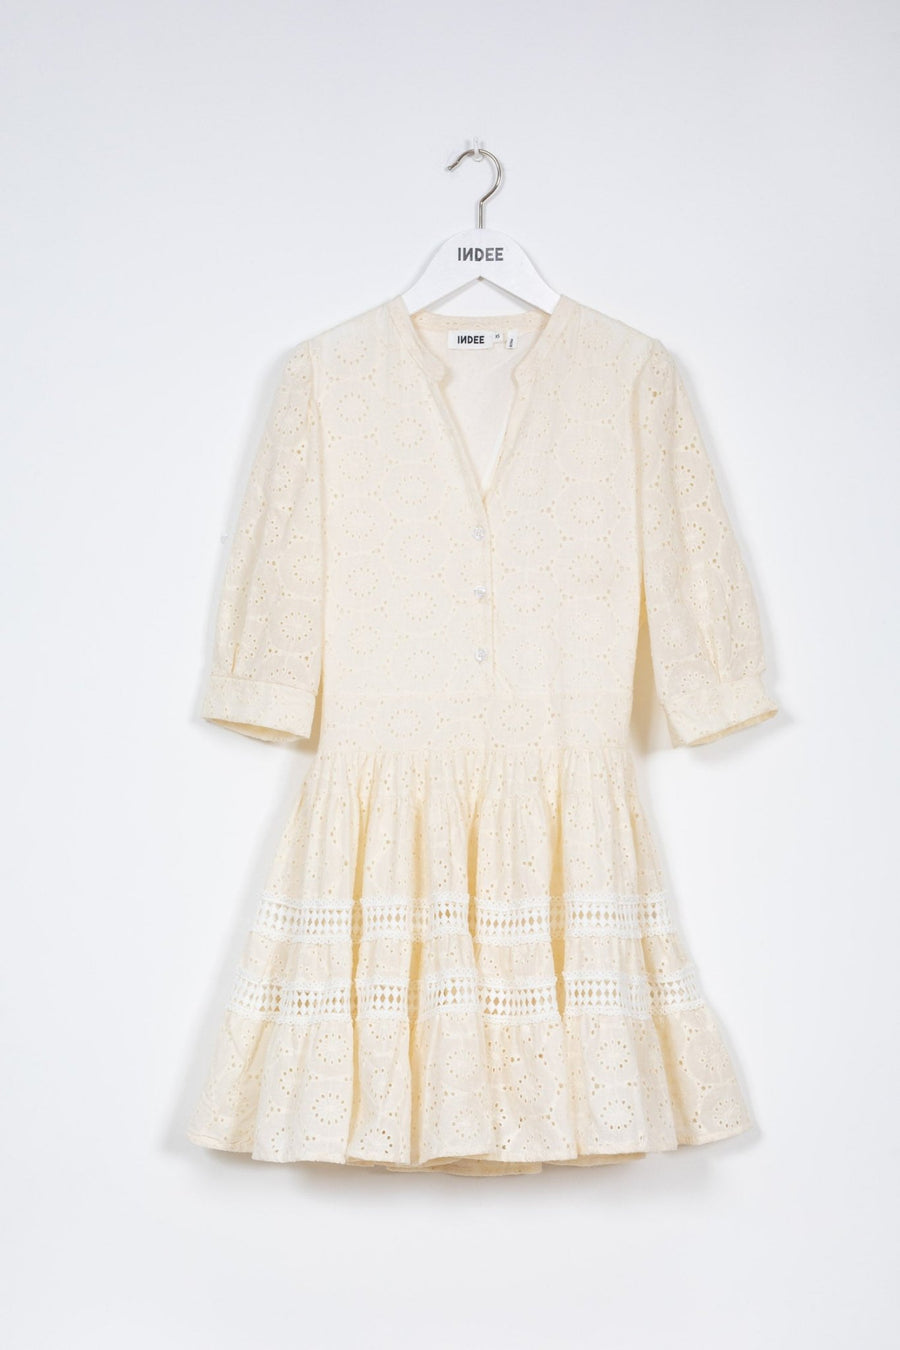 Midi Lace Dress with 3/4 Sleeve - Off White - Posh New York